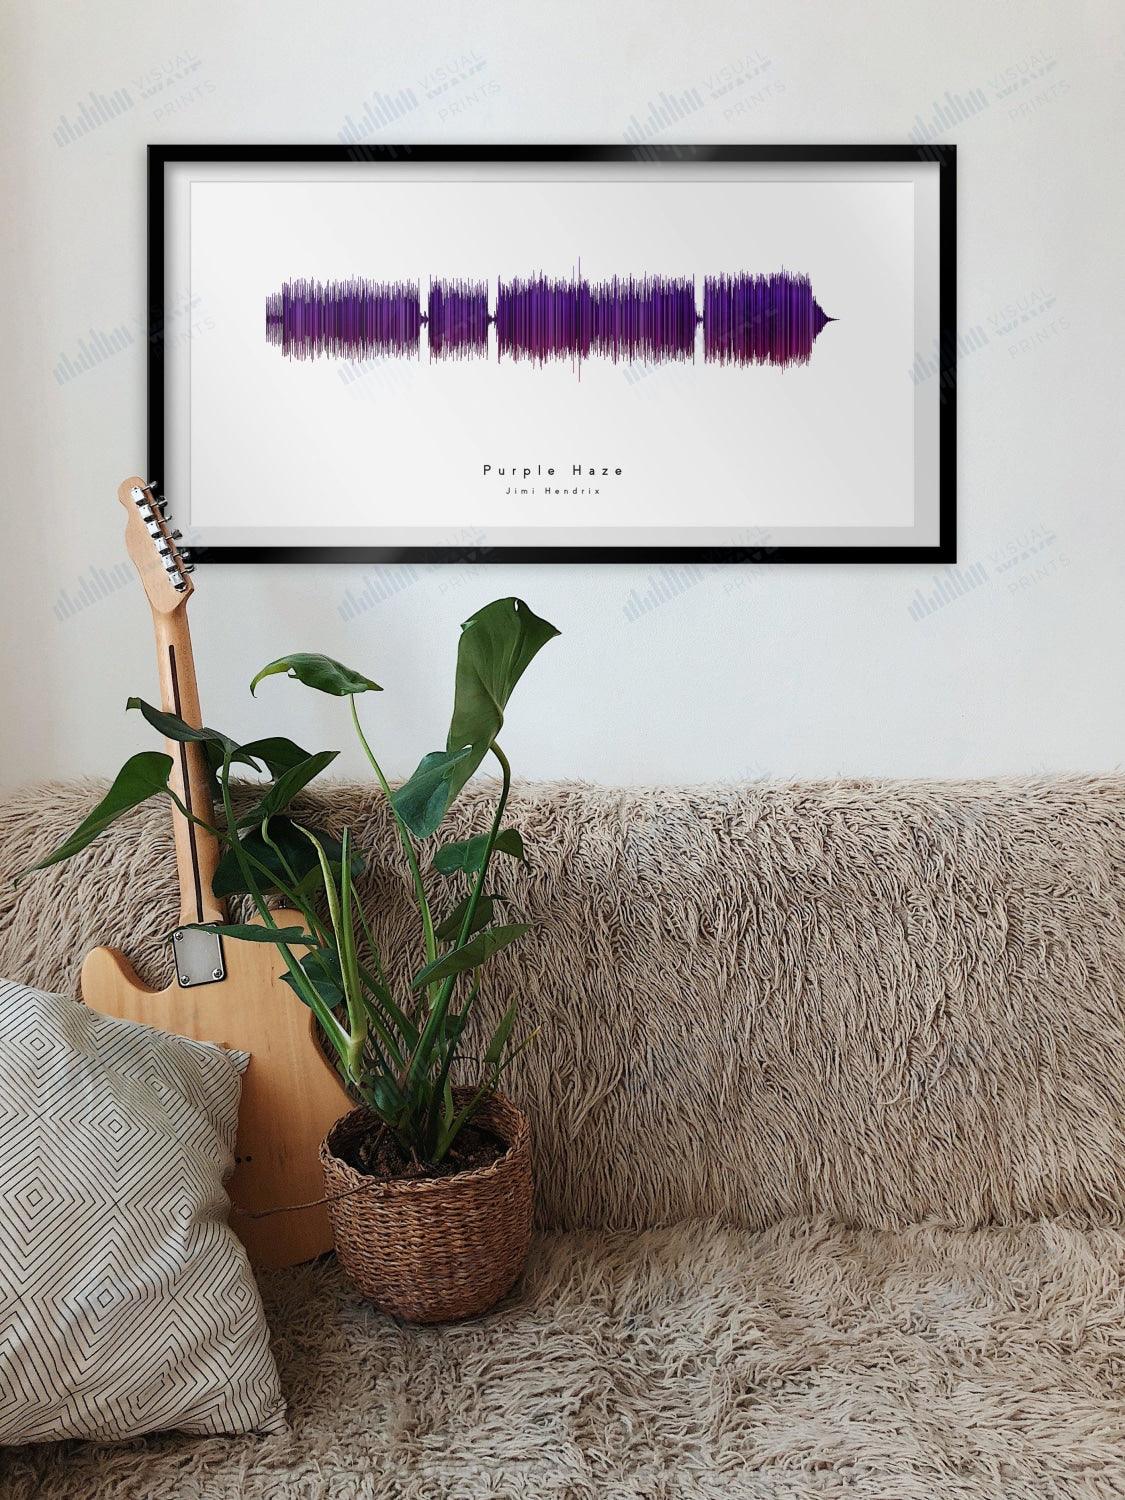 Purple Haze by Jimi Hendrix - Visual Wave Prints